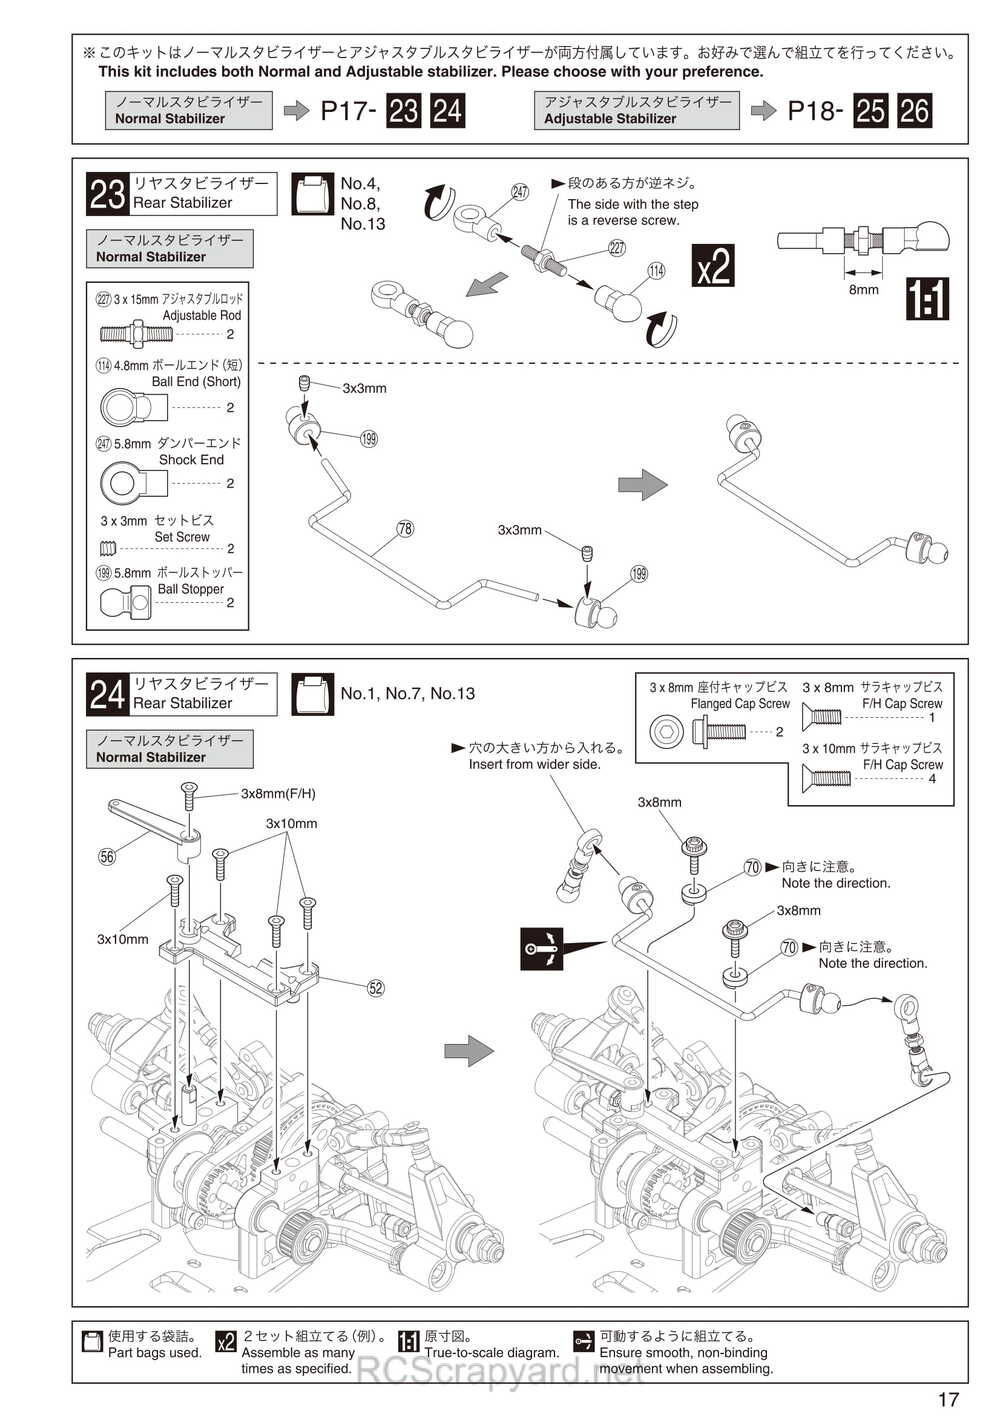 Kyosho - 31263 - V-One RRR Evo2 WC - Manual - Page 17